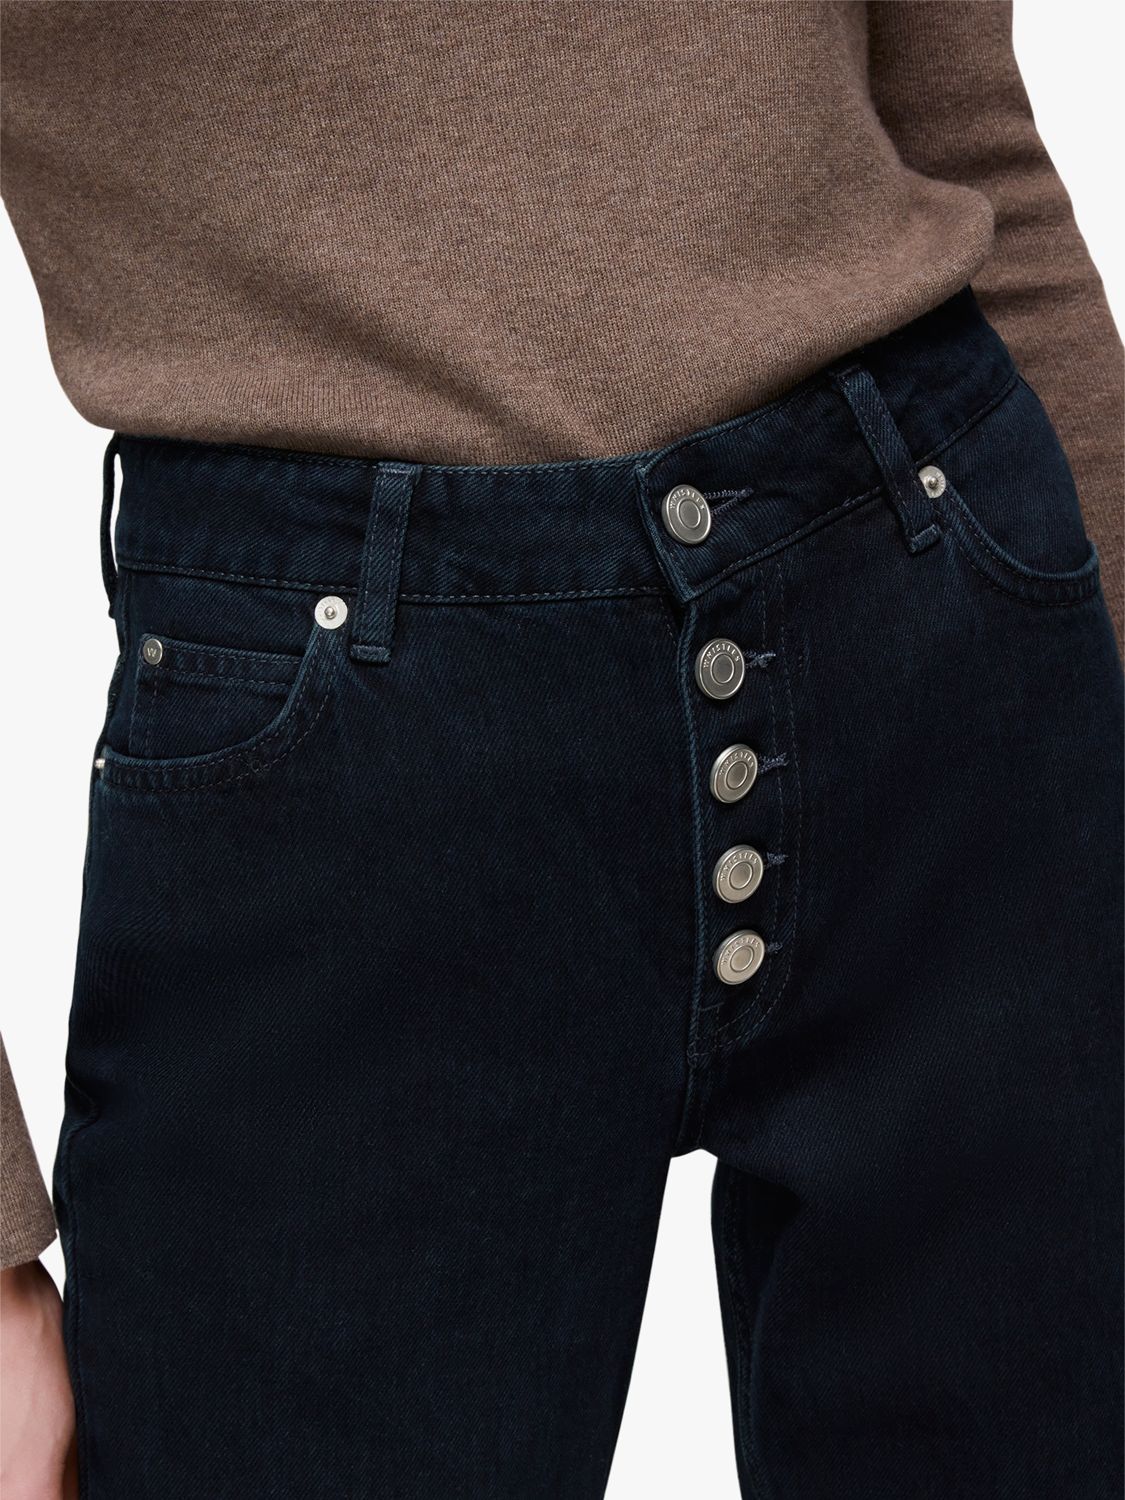 Buy Whistles Authentic Hollie Button Front Jeans, Dark Denim Online at johnlewis.com